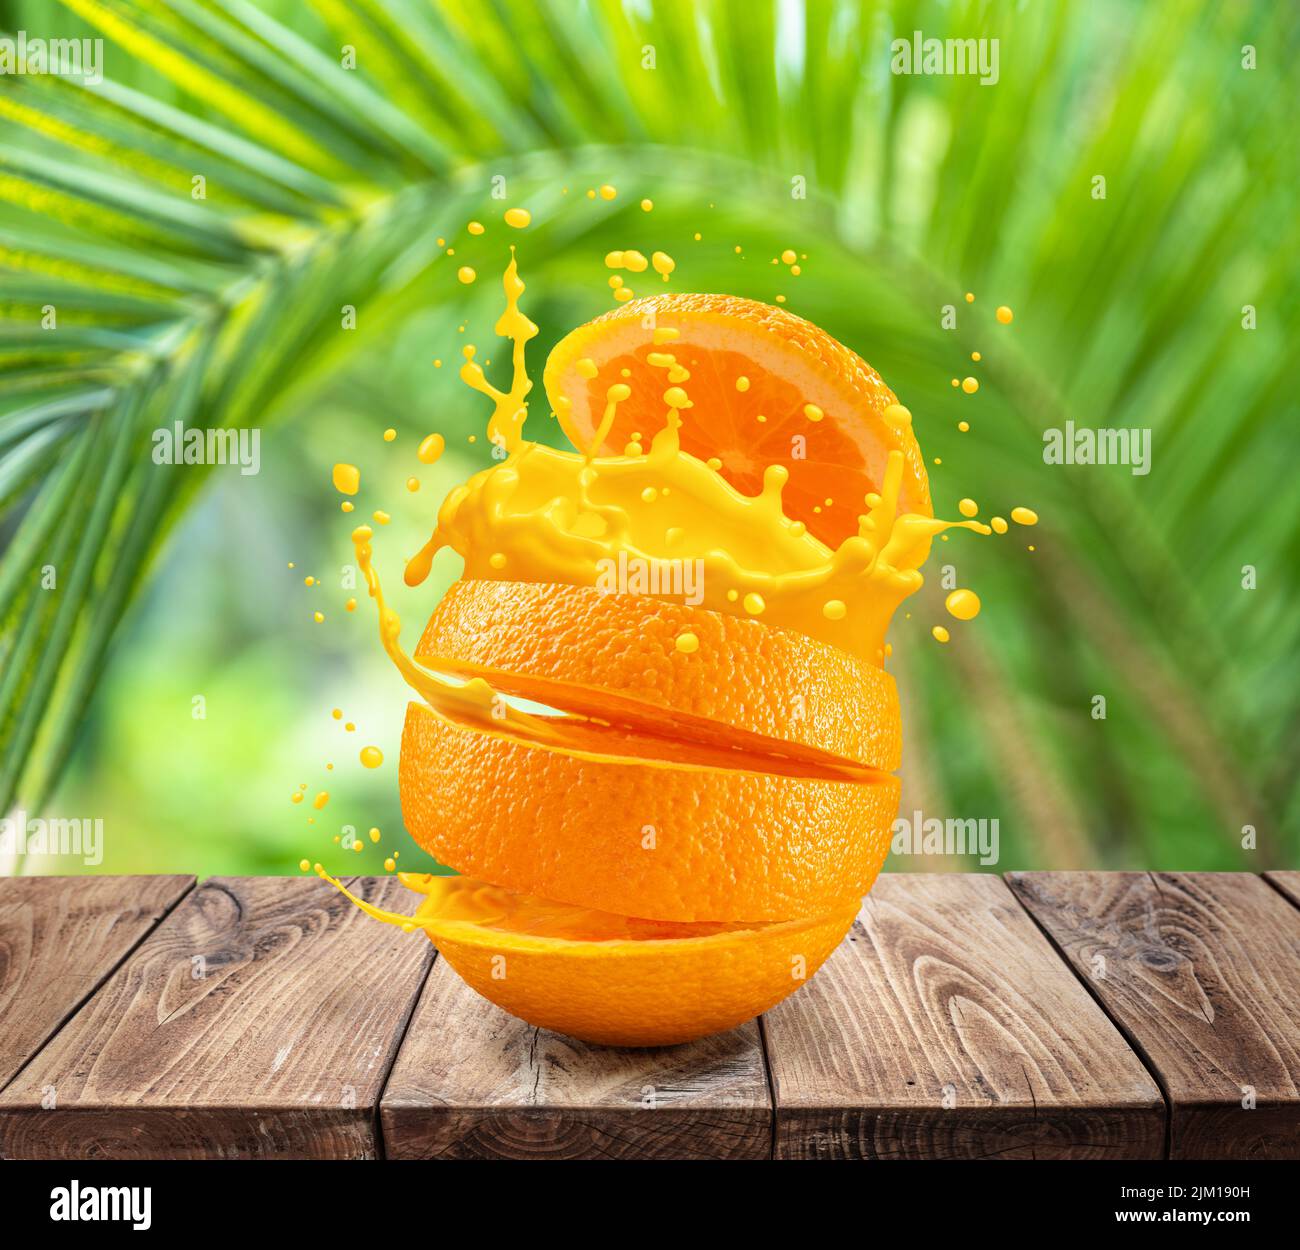 Rodajas de fruta naranja salpicando zumo de naranja sobre la mesa de madera. Hojas verdes de palma en el fondo. Foto de stock